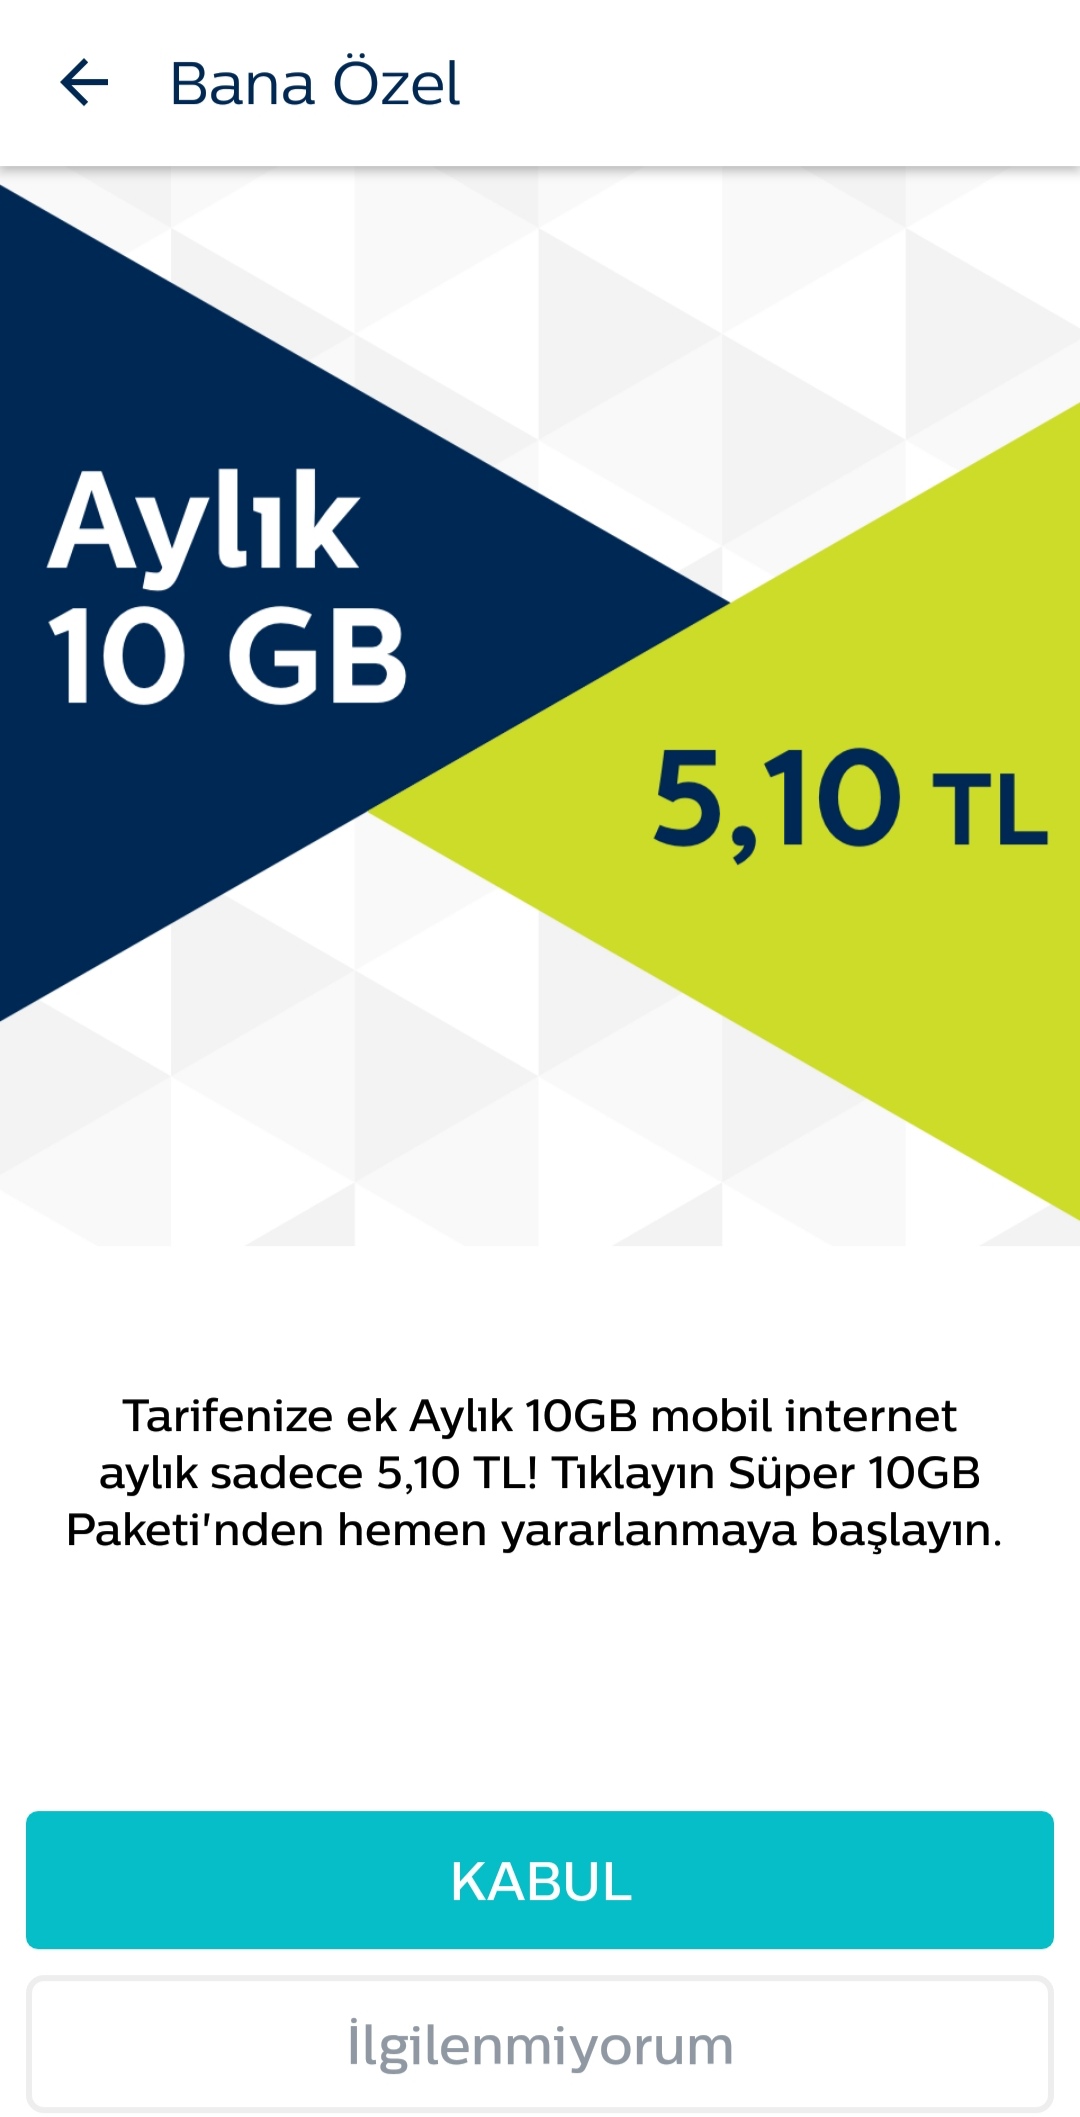 turk telekom aylik ek 3 gb 3 06 ozel teklif donanimhaber forum